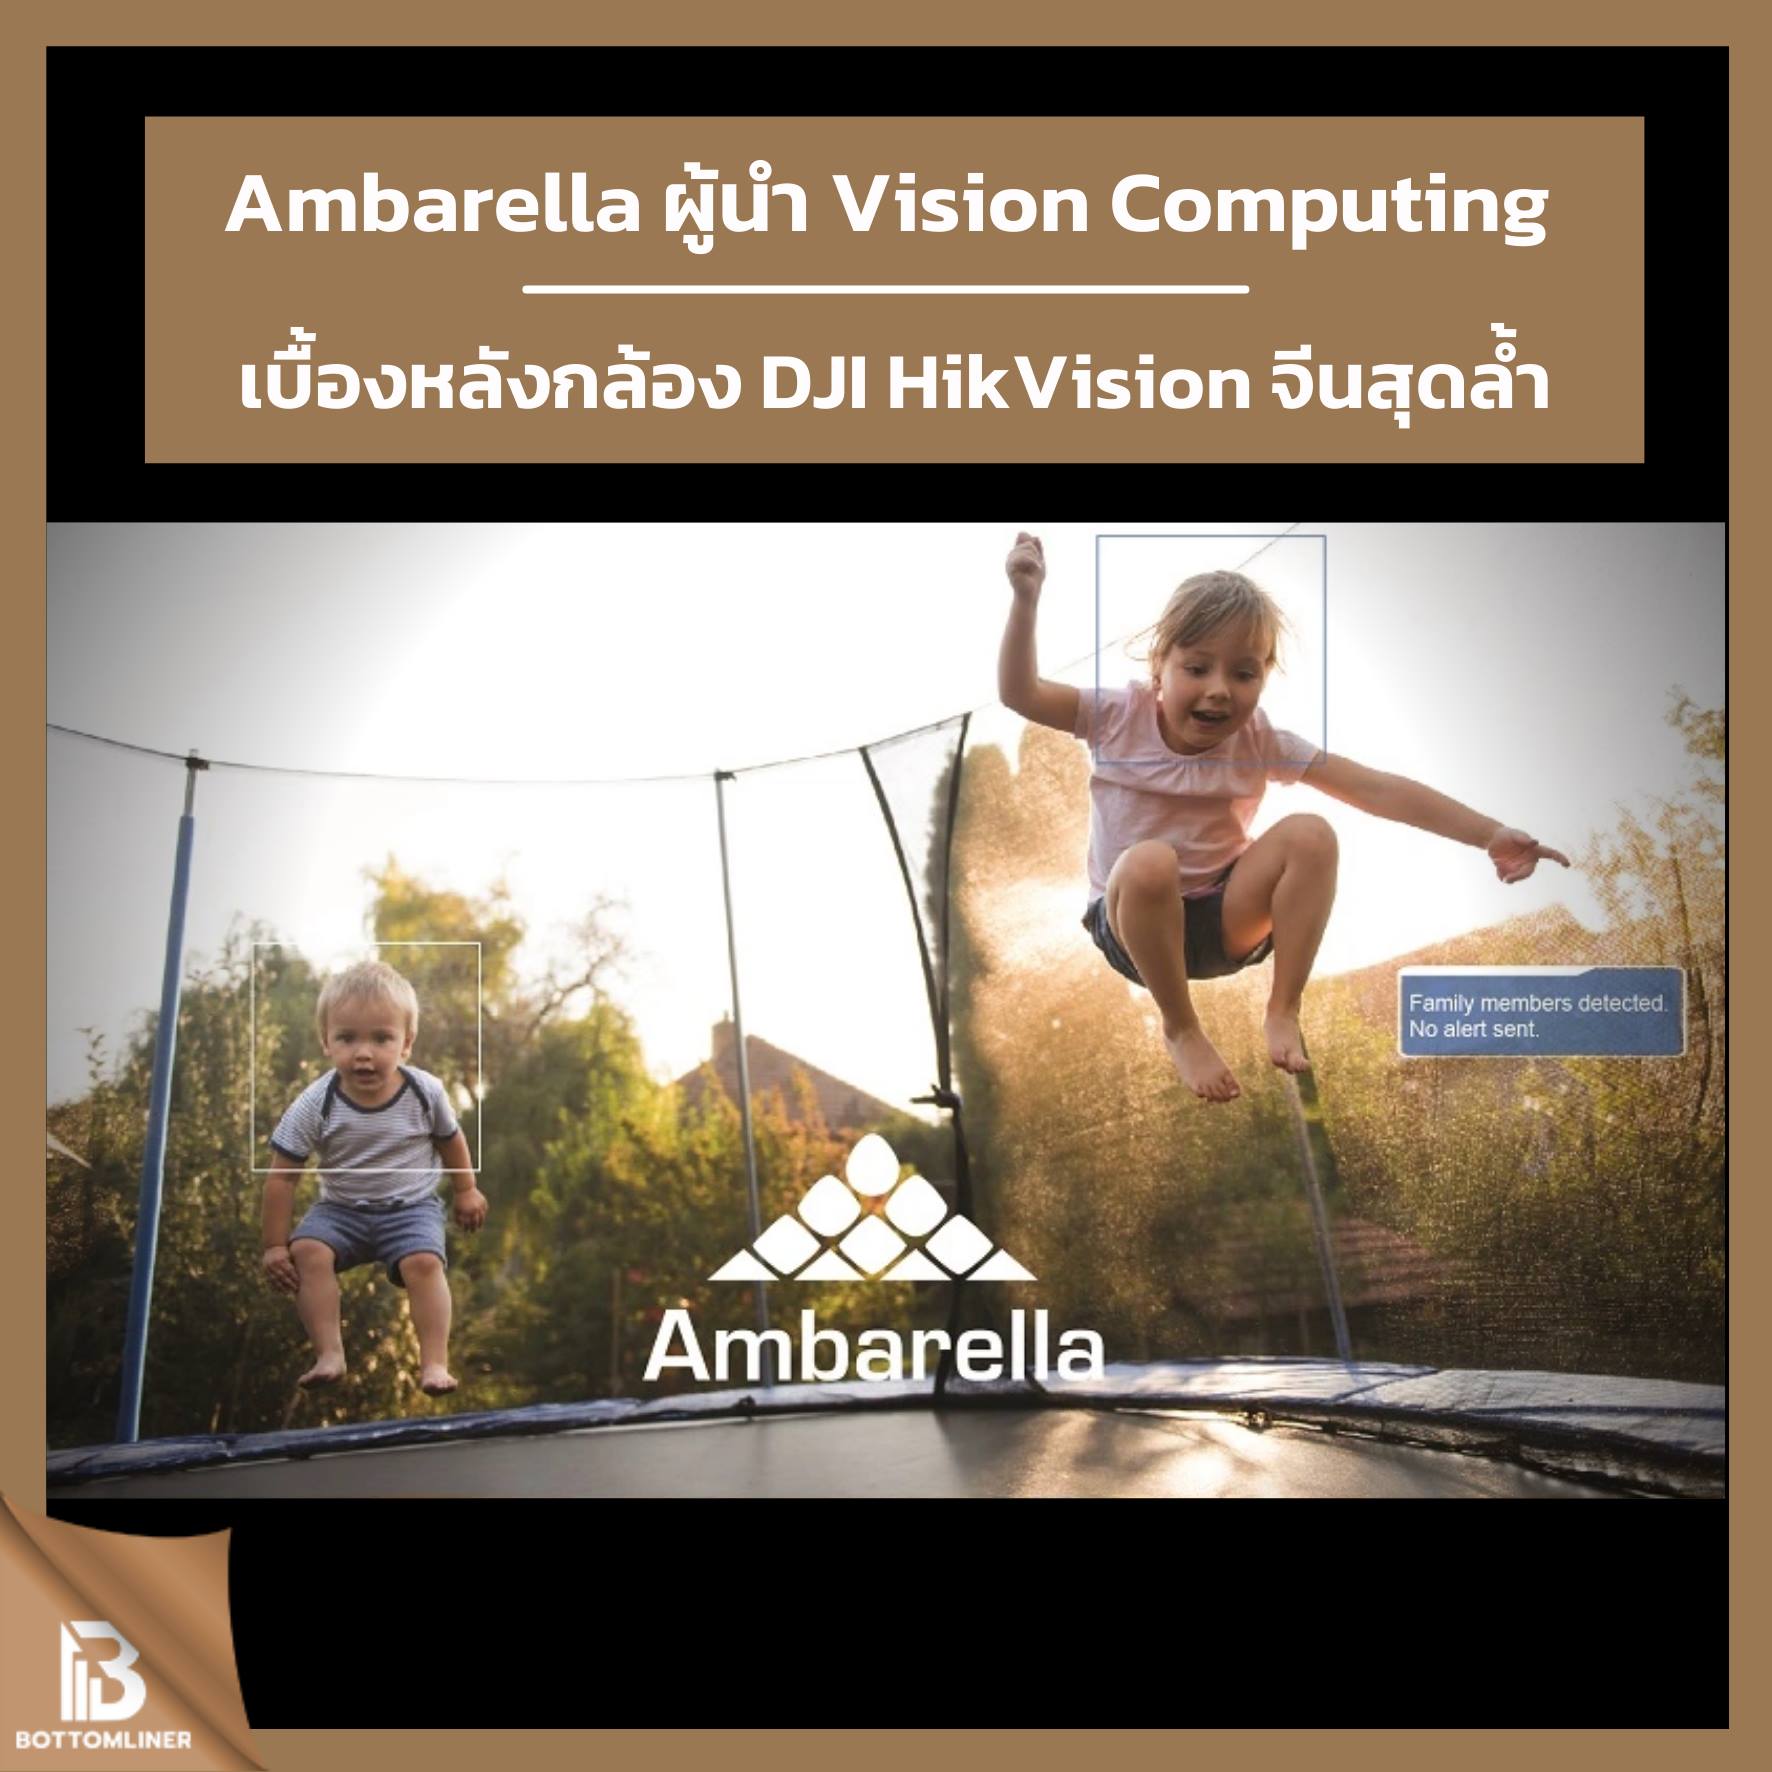 Ambarella ผู้นำ Vision Computing เบื้องหลังกล้อง DJI HikVision จีนสุดล้ำ